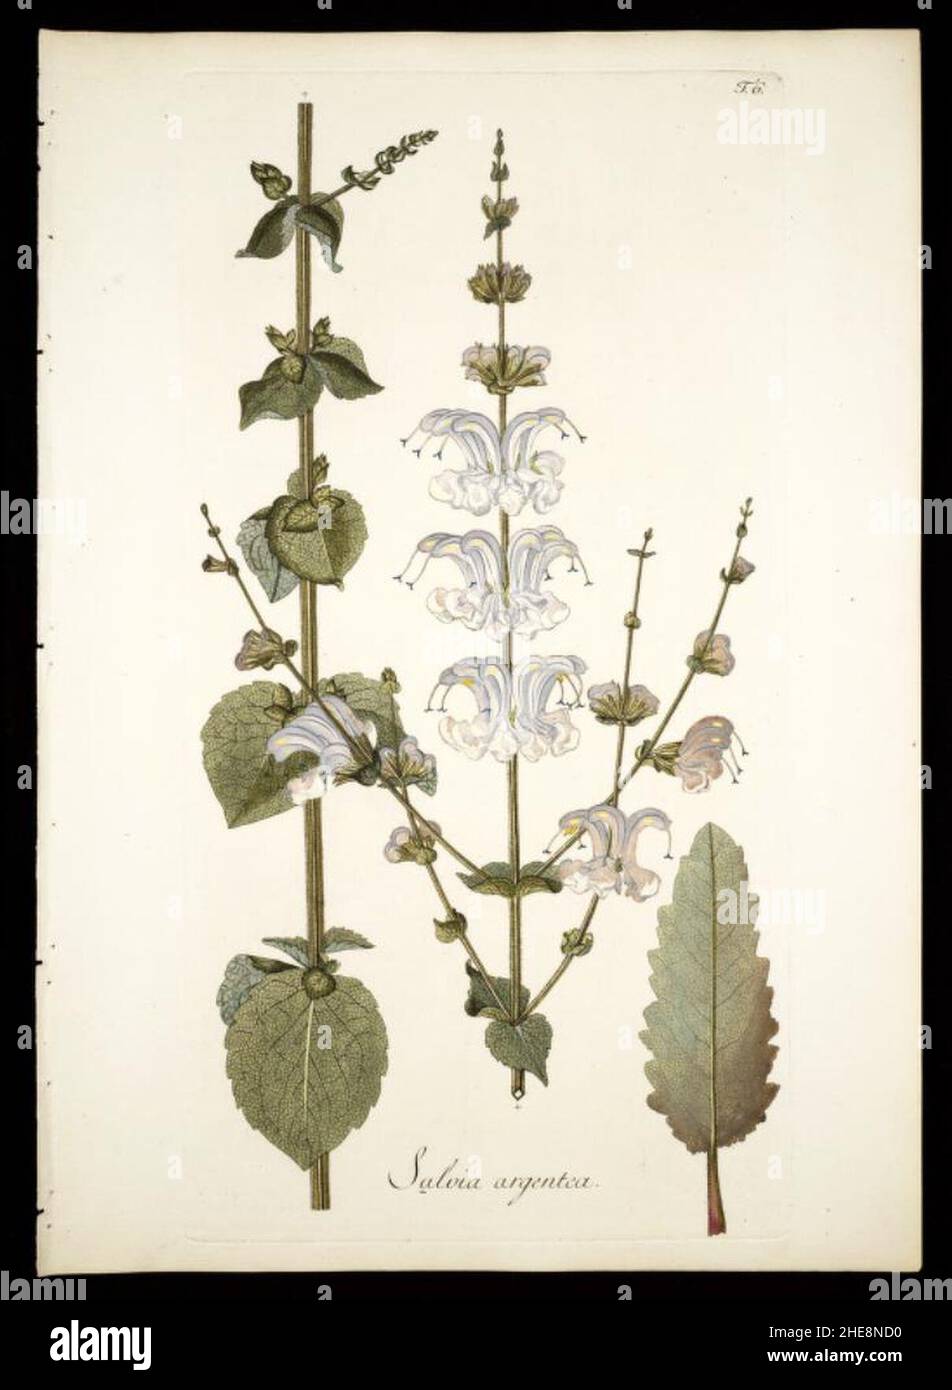 Salvia argentea-original. Stock Photo